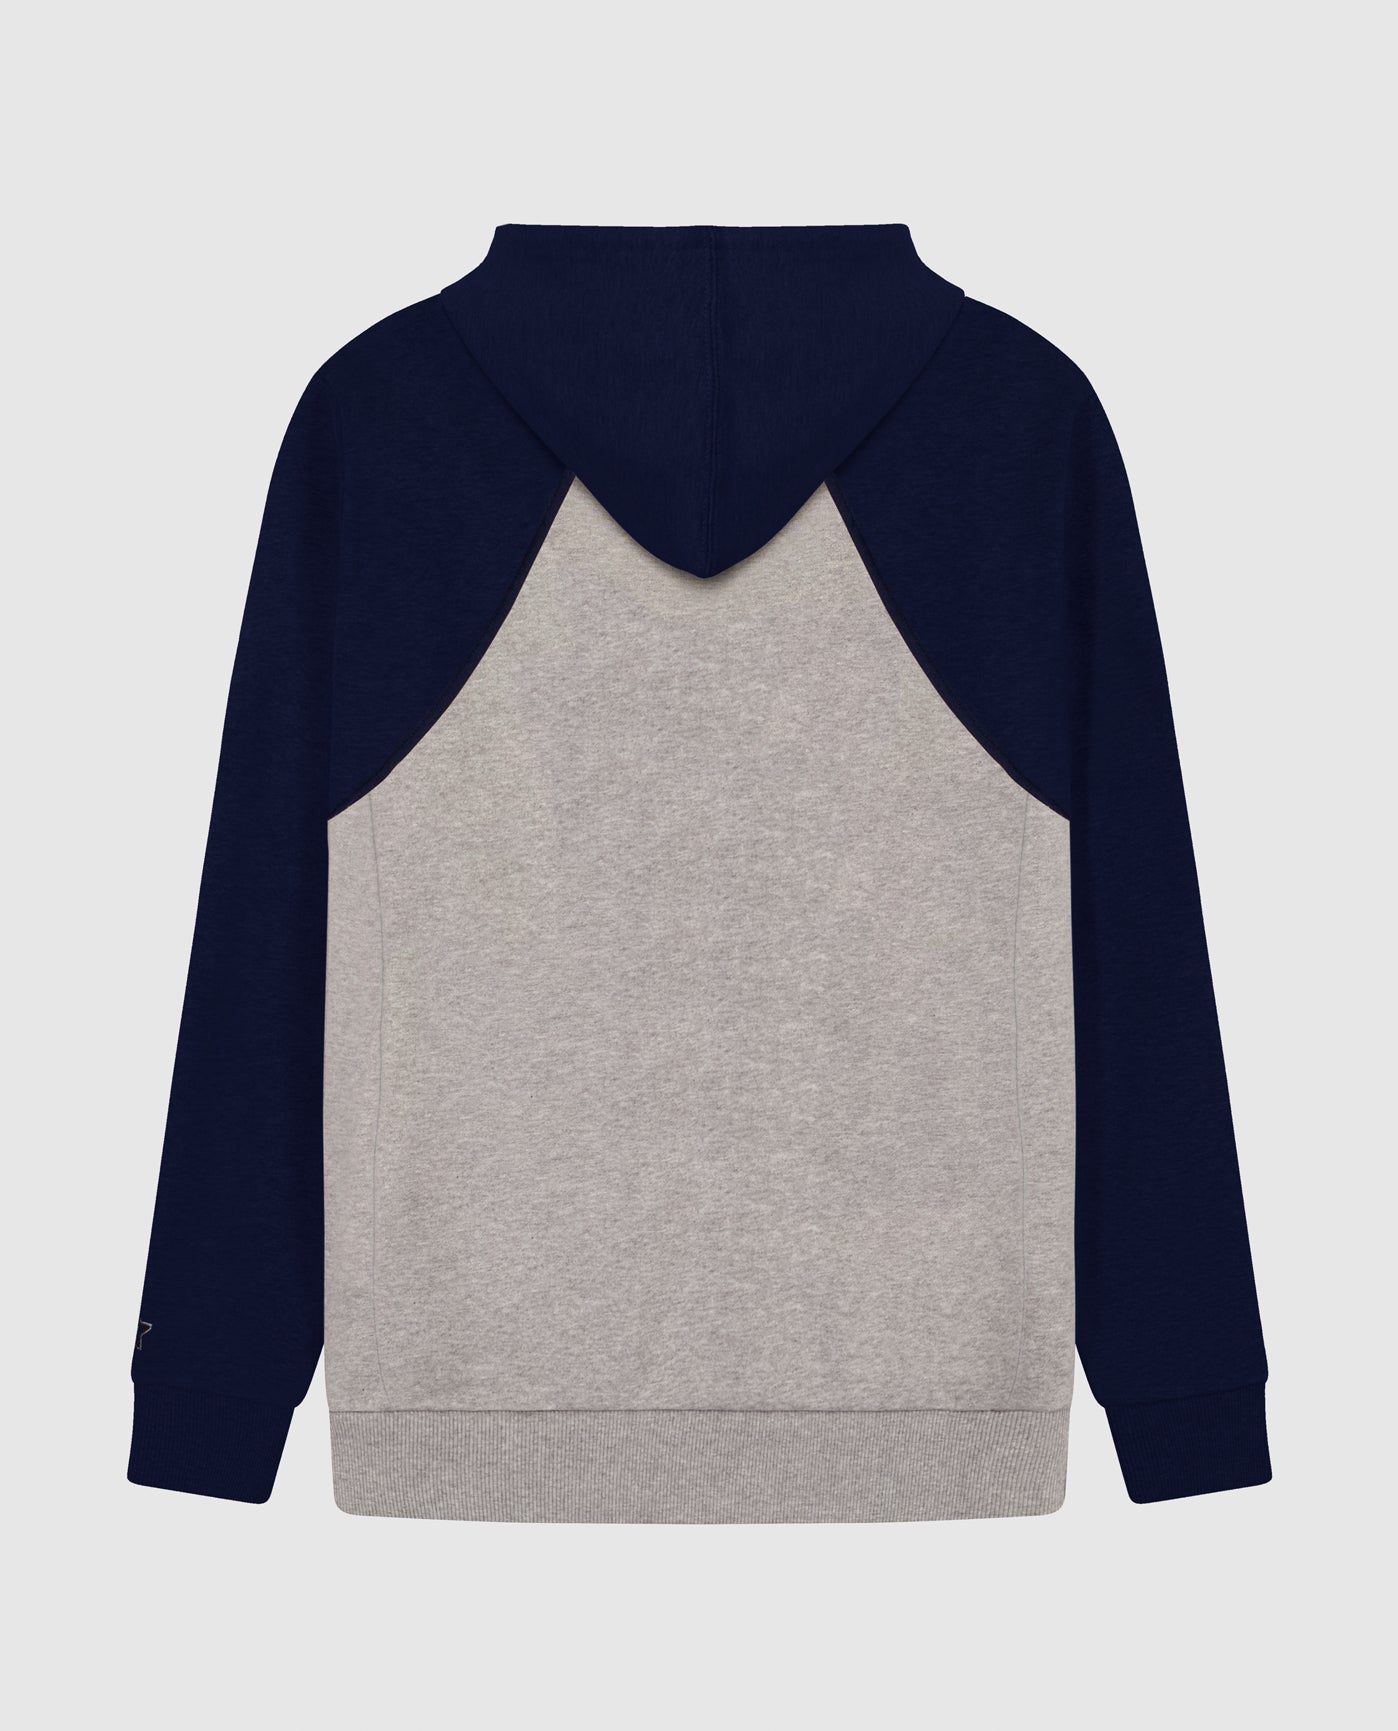 Dallas Cowboys Front Zip-Pocket Hoodie Sweatshirt